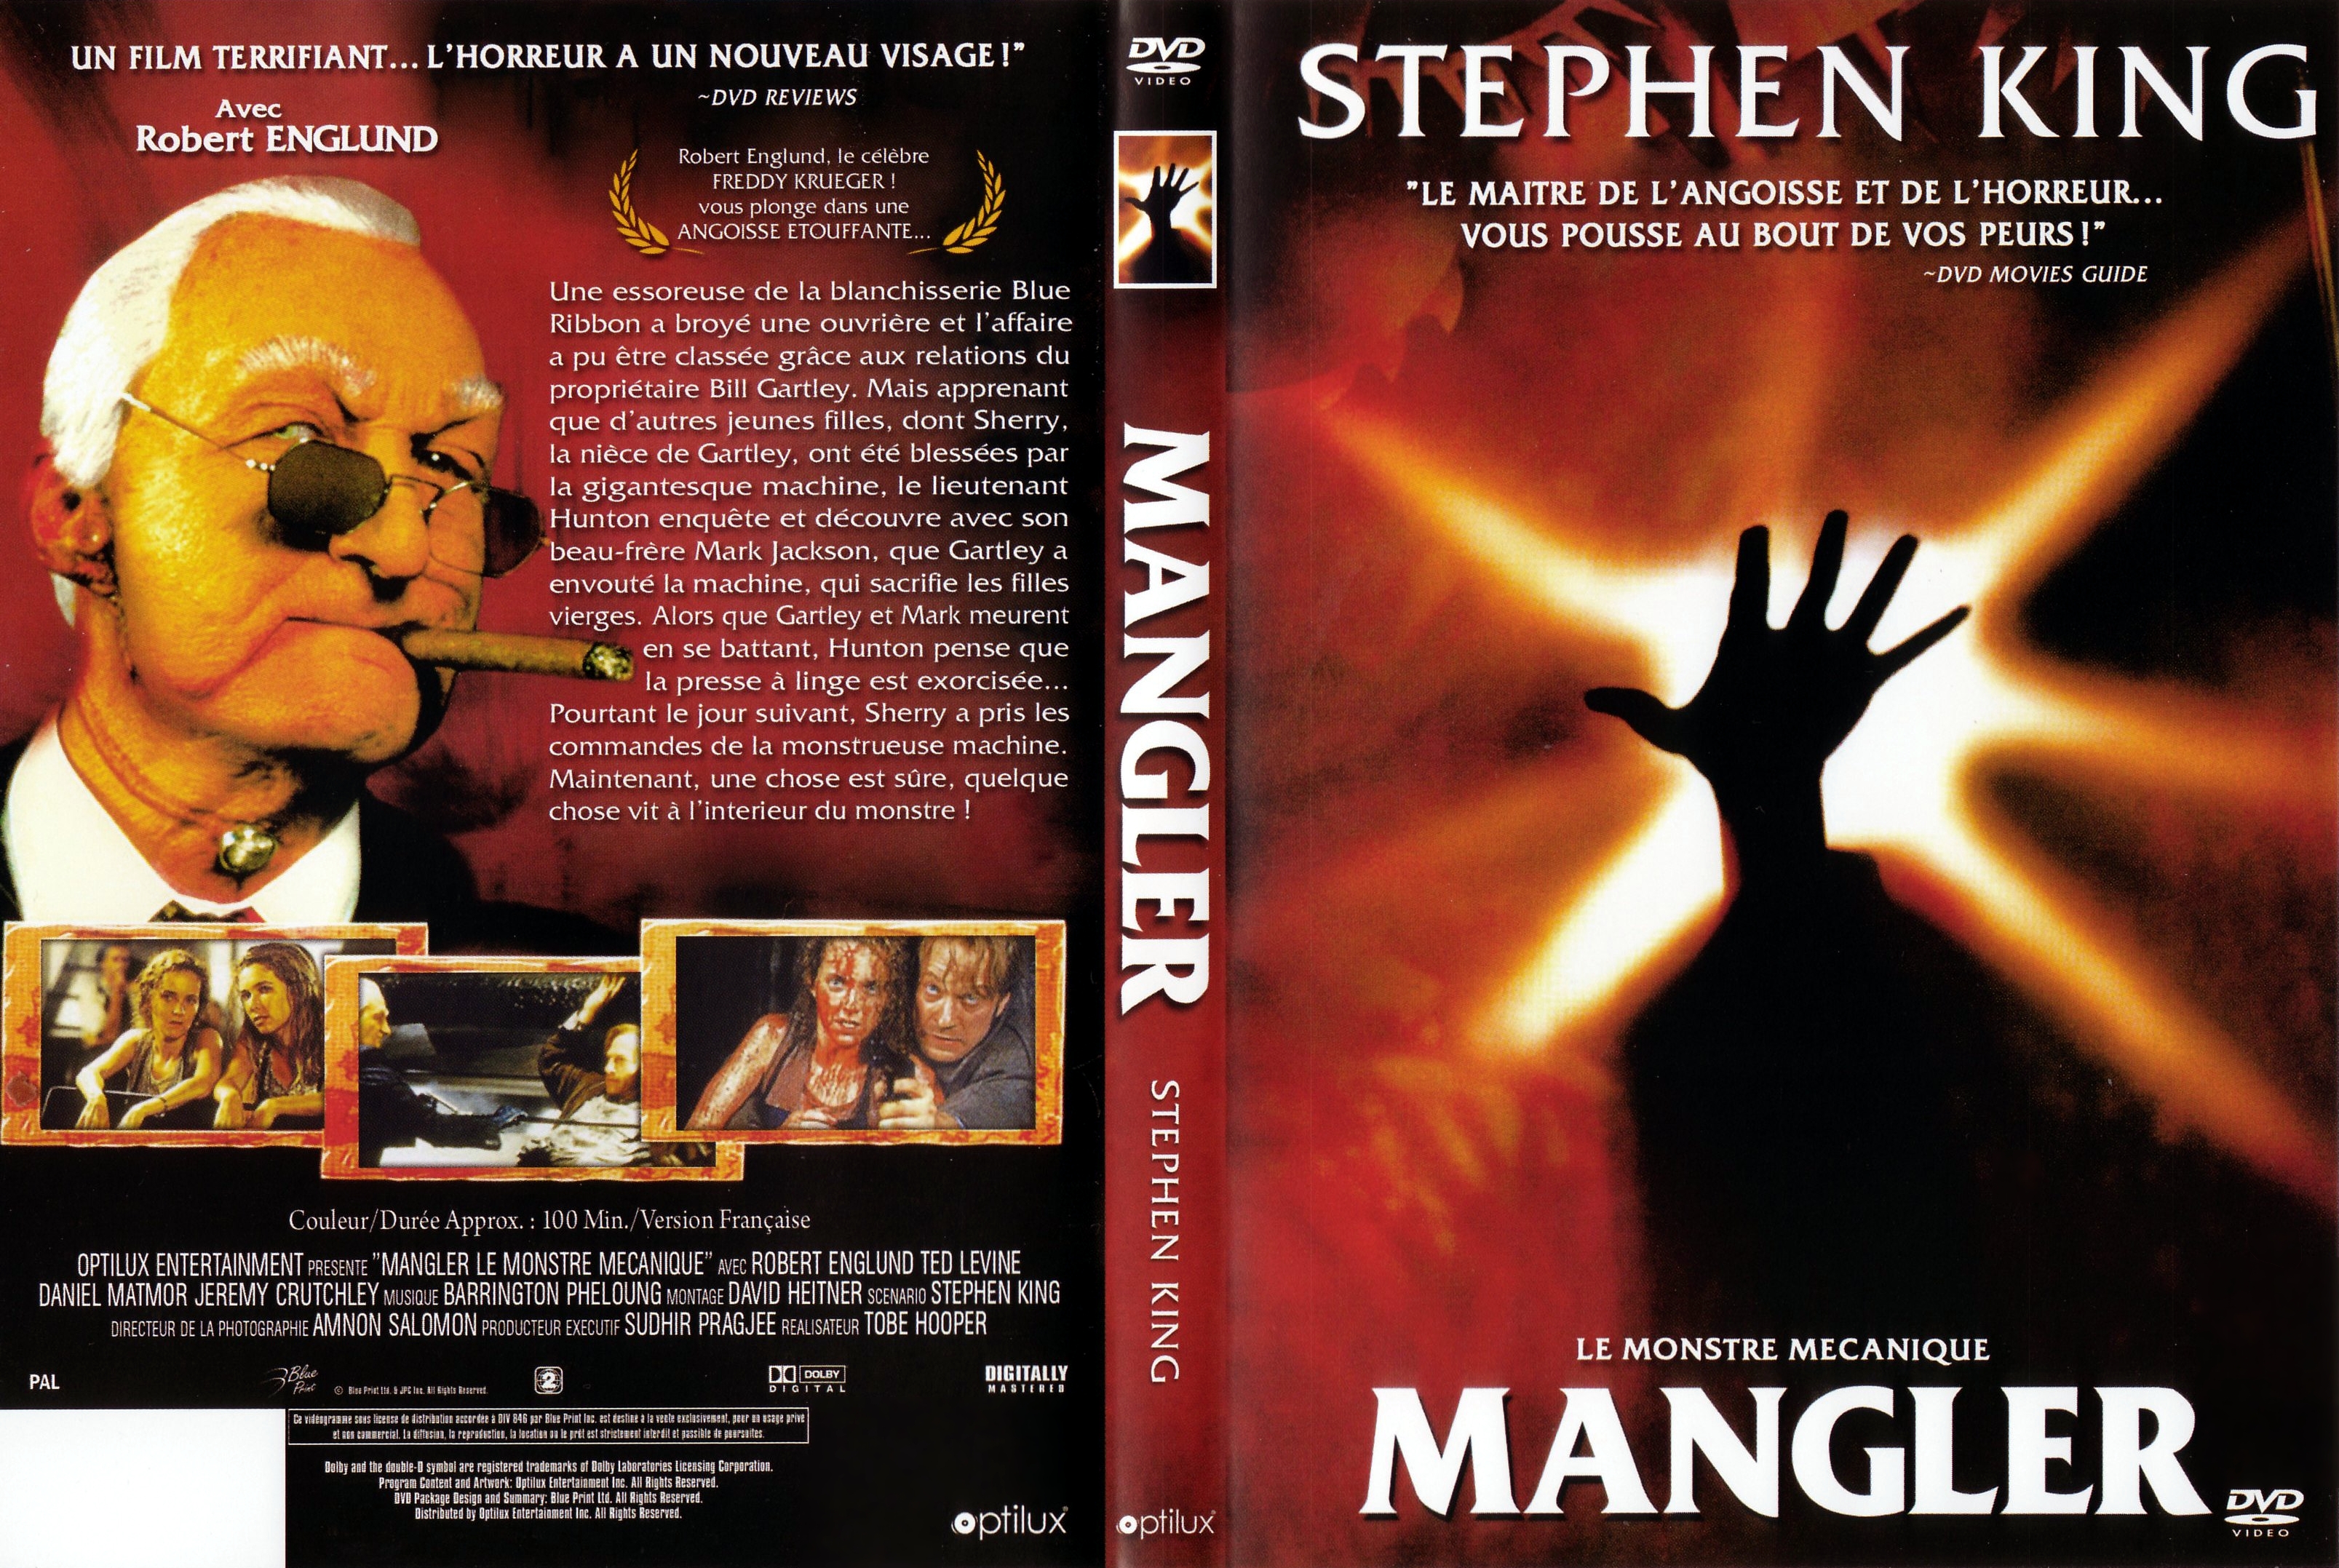 Jaquette DVD The mangler v2